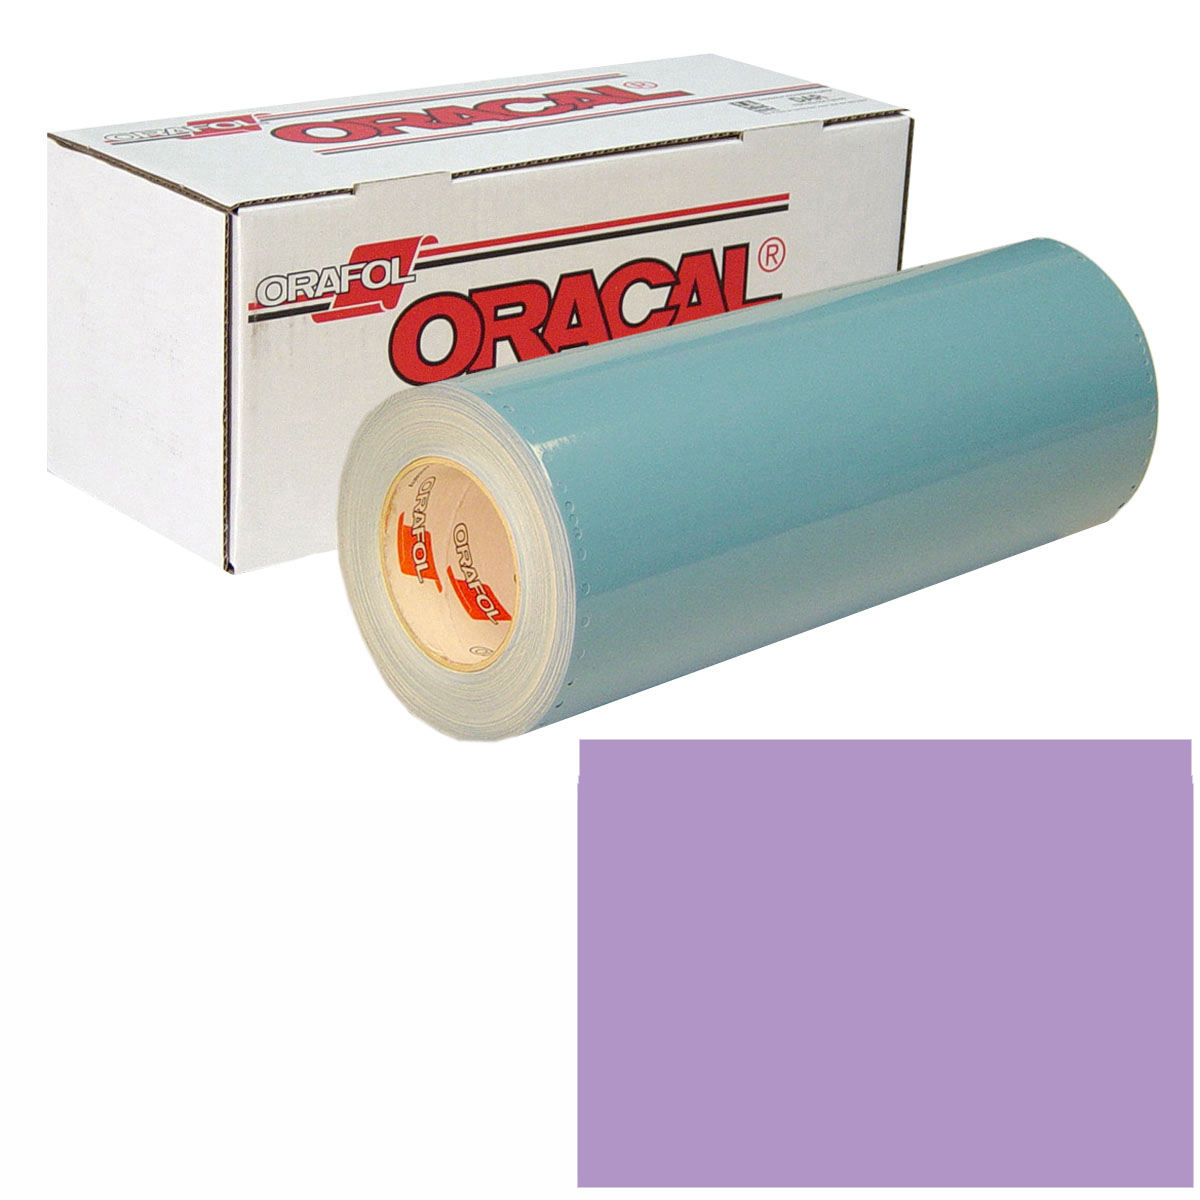 ORACAL 751 Unp 48in X 50yd 042 Lilac